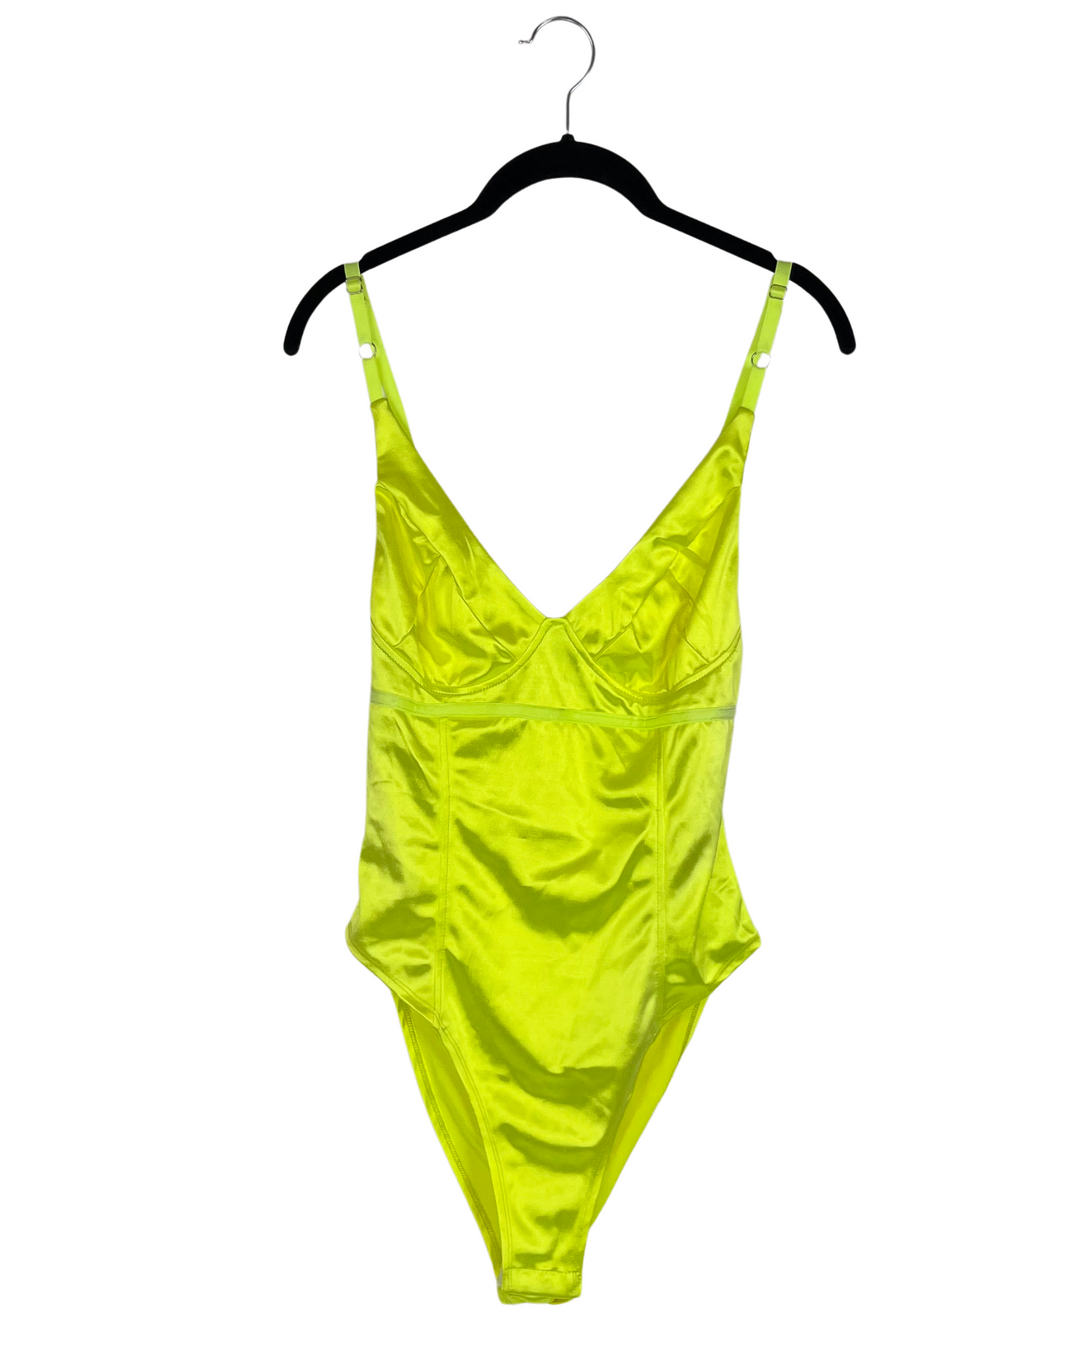 Neon Yellow Bodysuit - Size 2/4 and 6/8